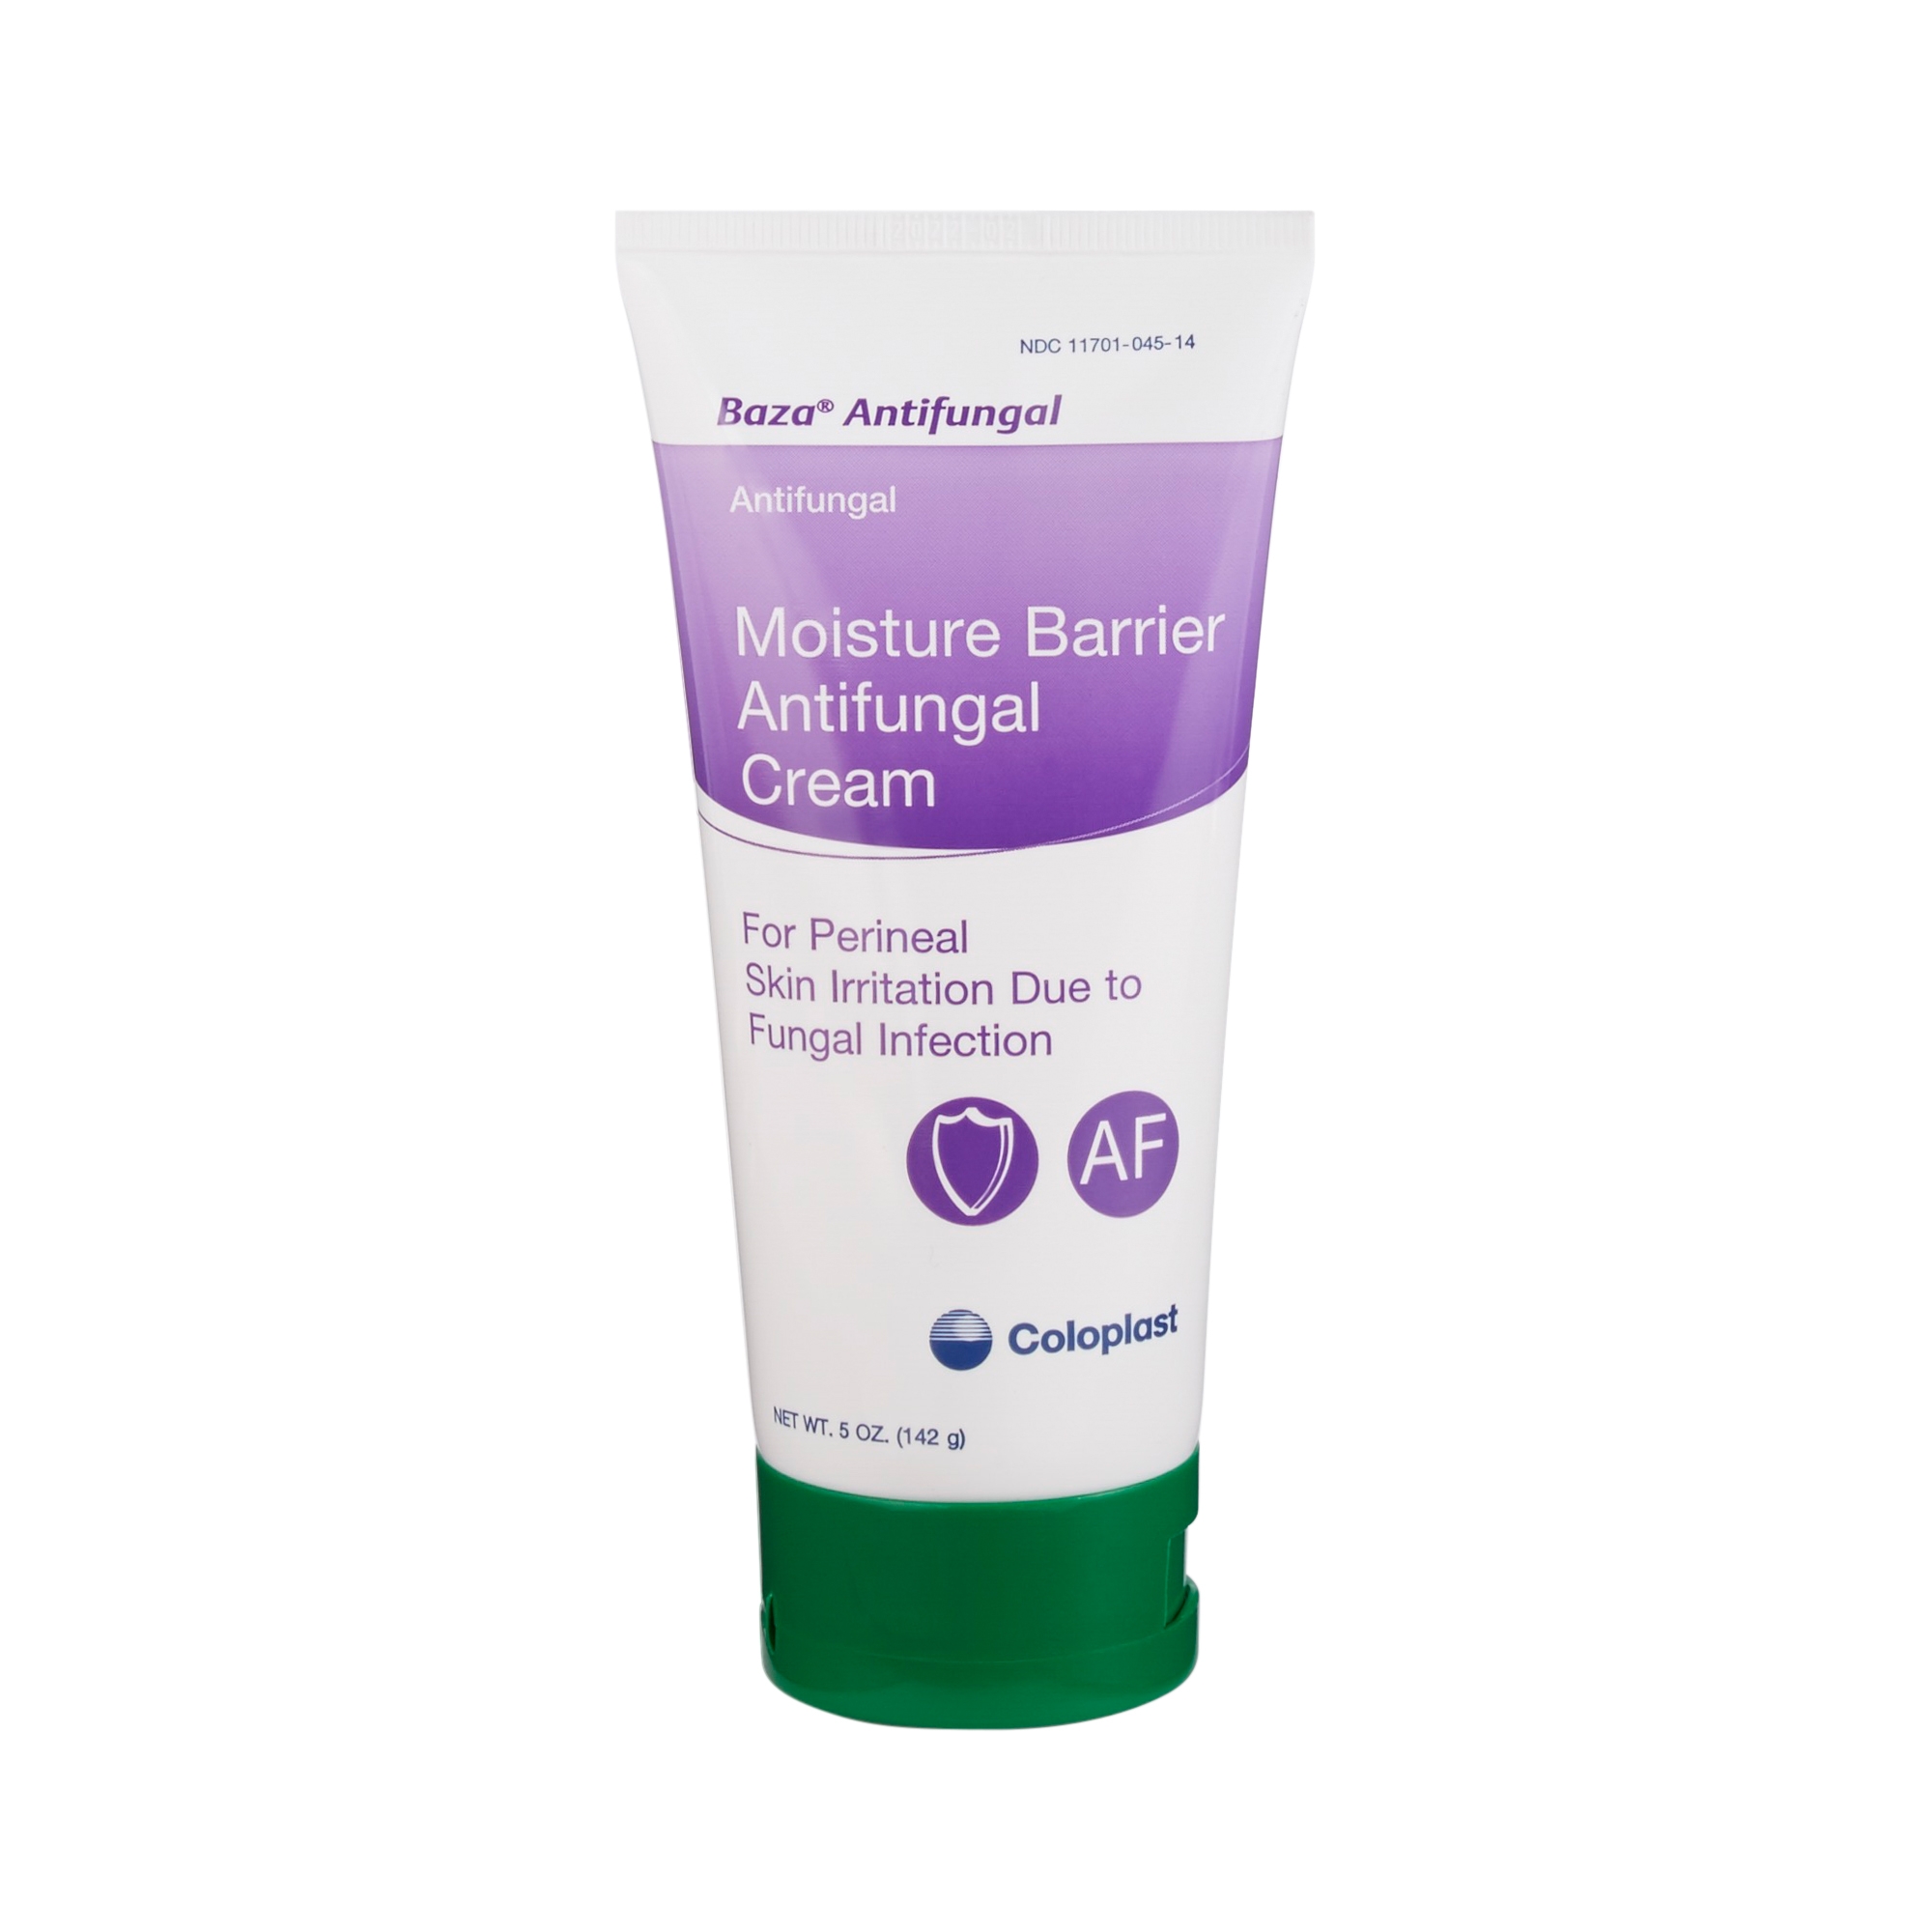 Baza Moisture Barrier Antifungal Cream